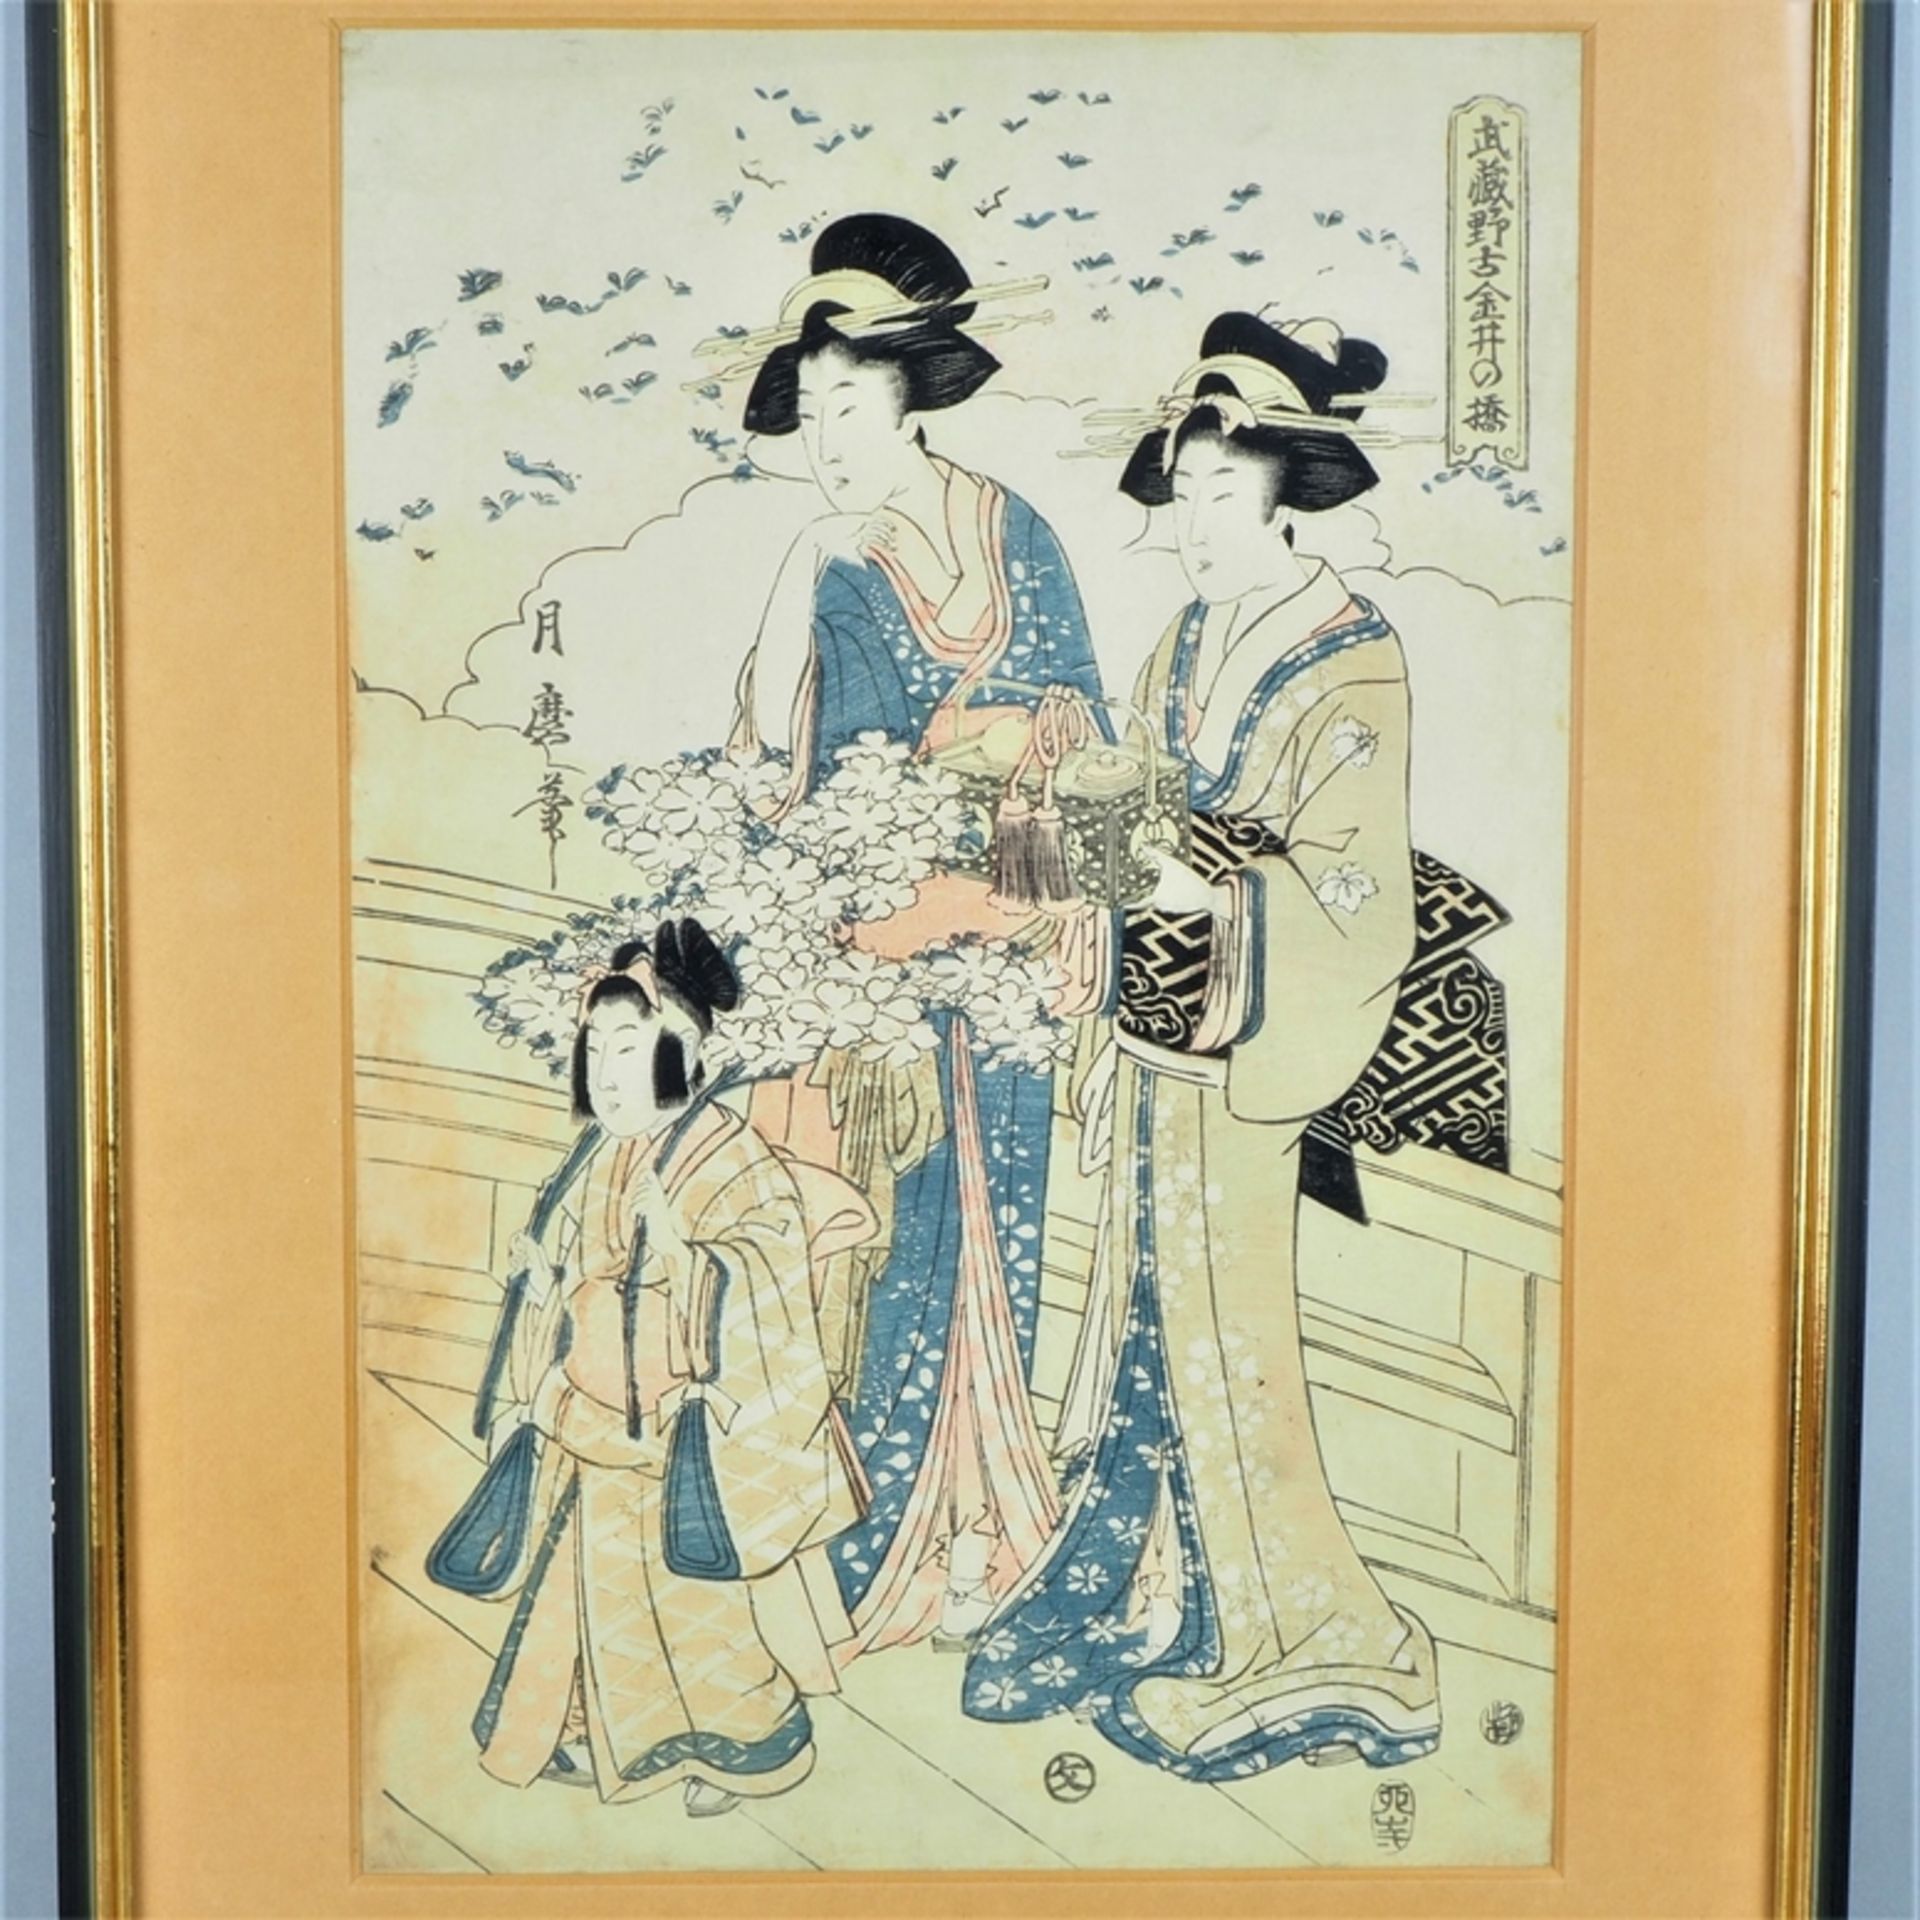 Japanese woodblock print, ca. 1807